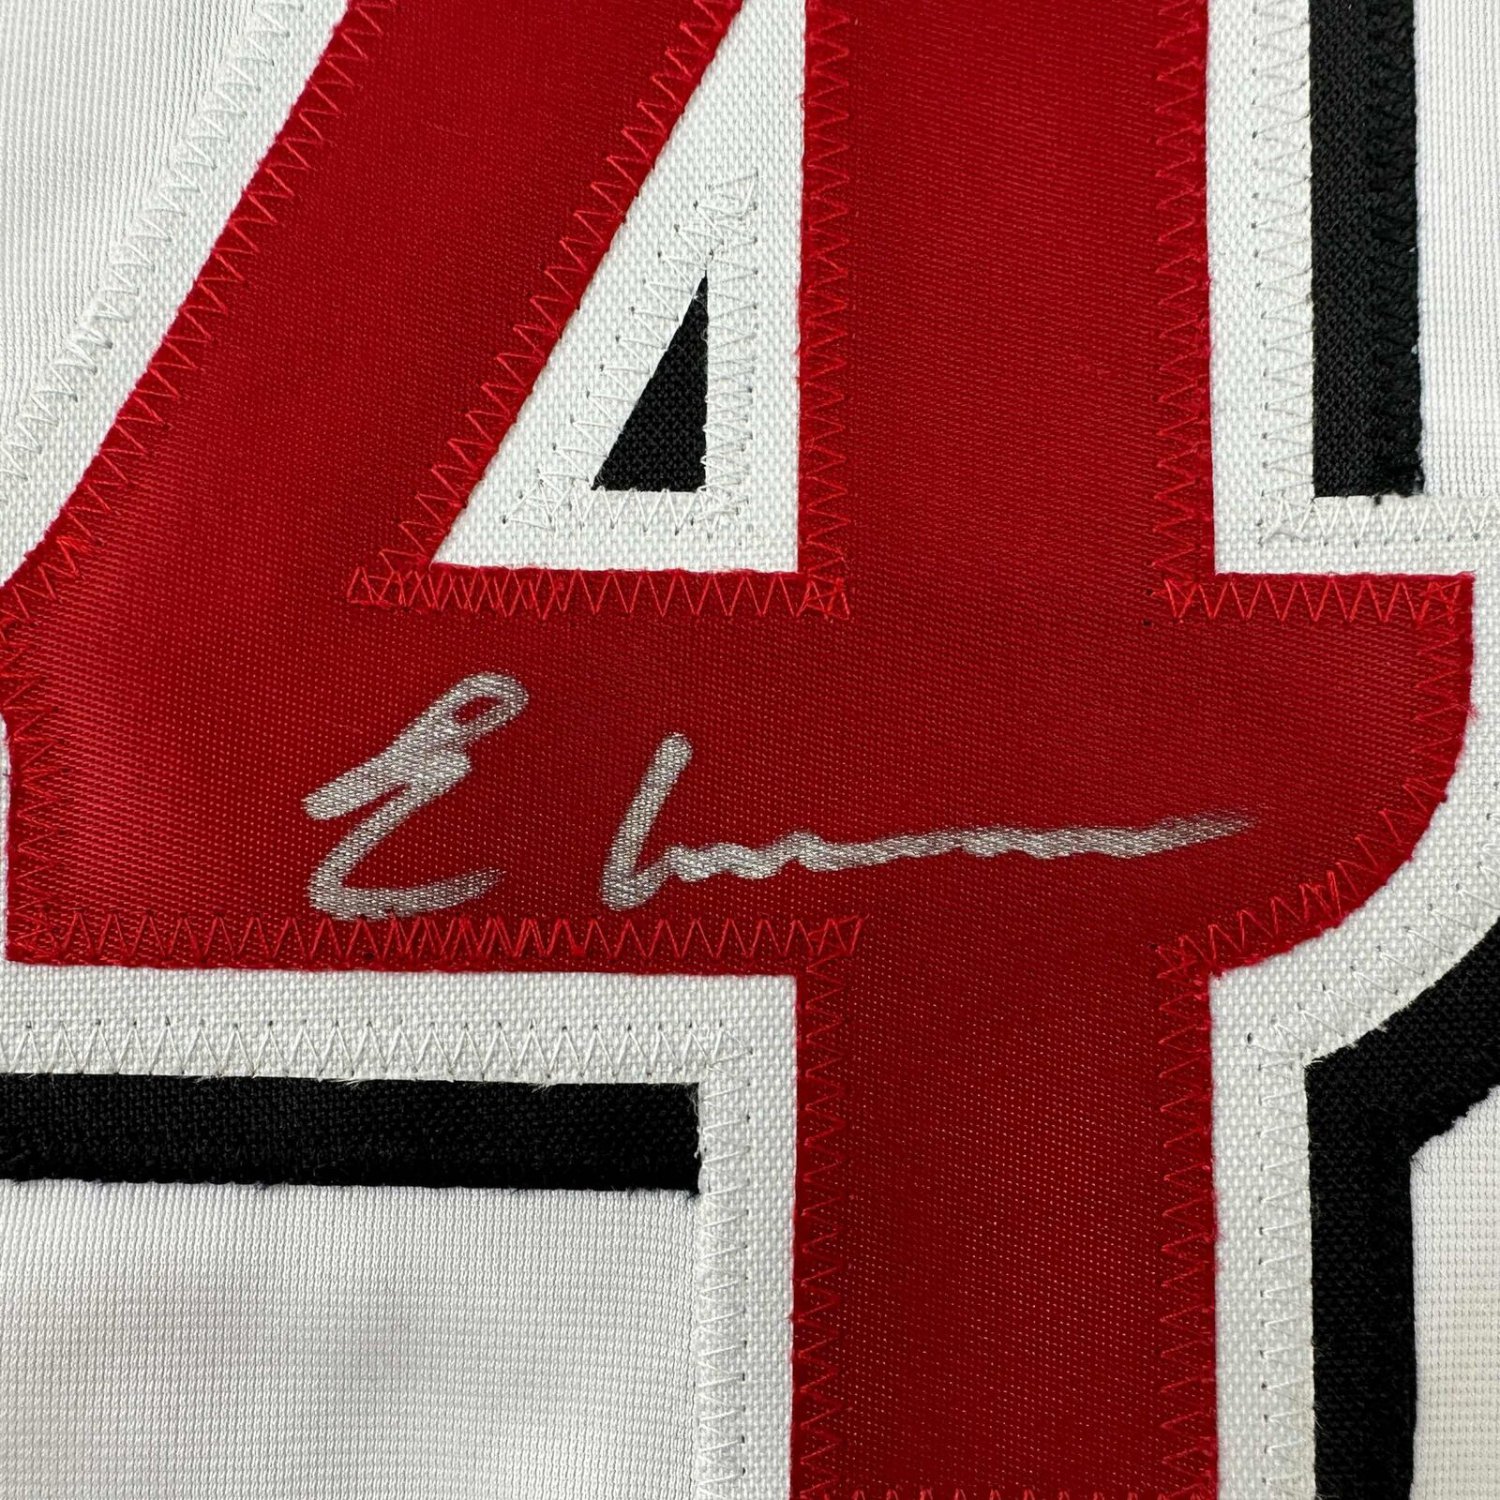 Elly De La Cruz Signed Autographed Cincinnati Reds Jersey BECKETT